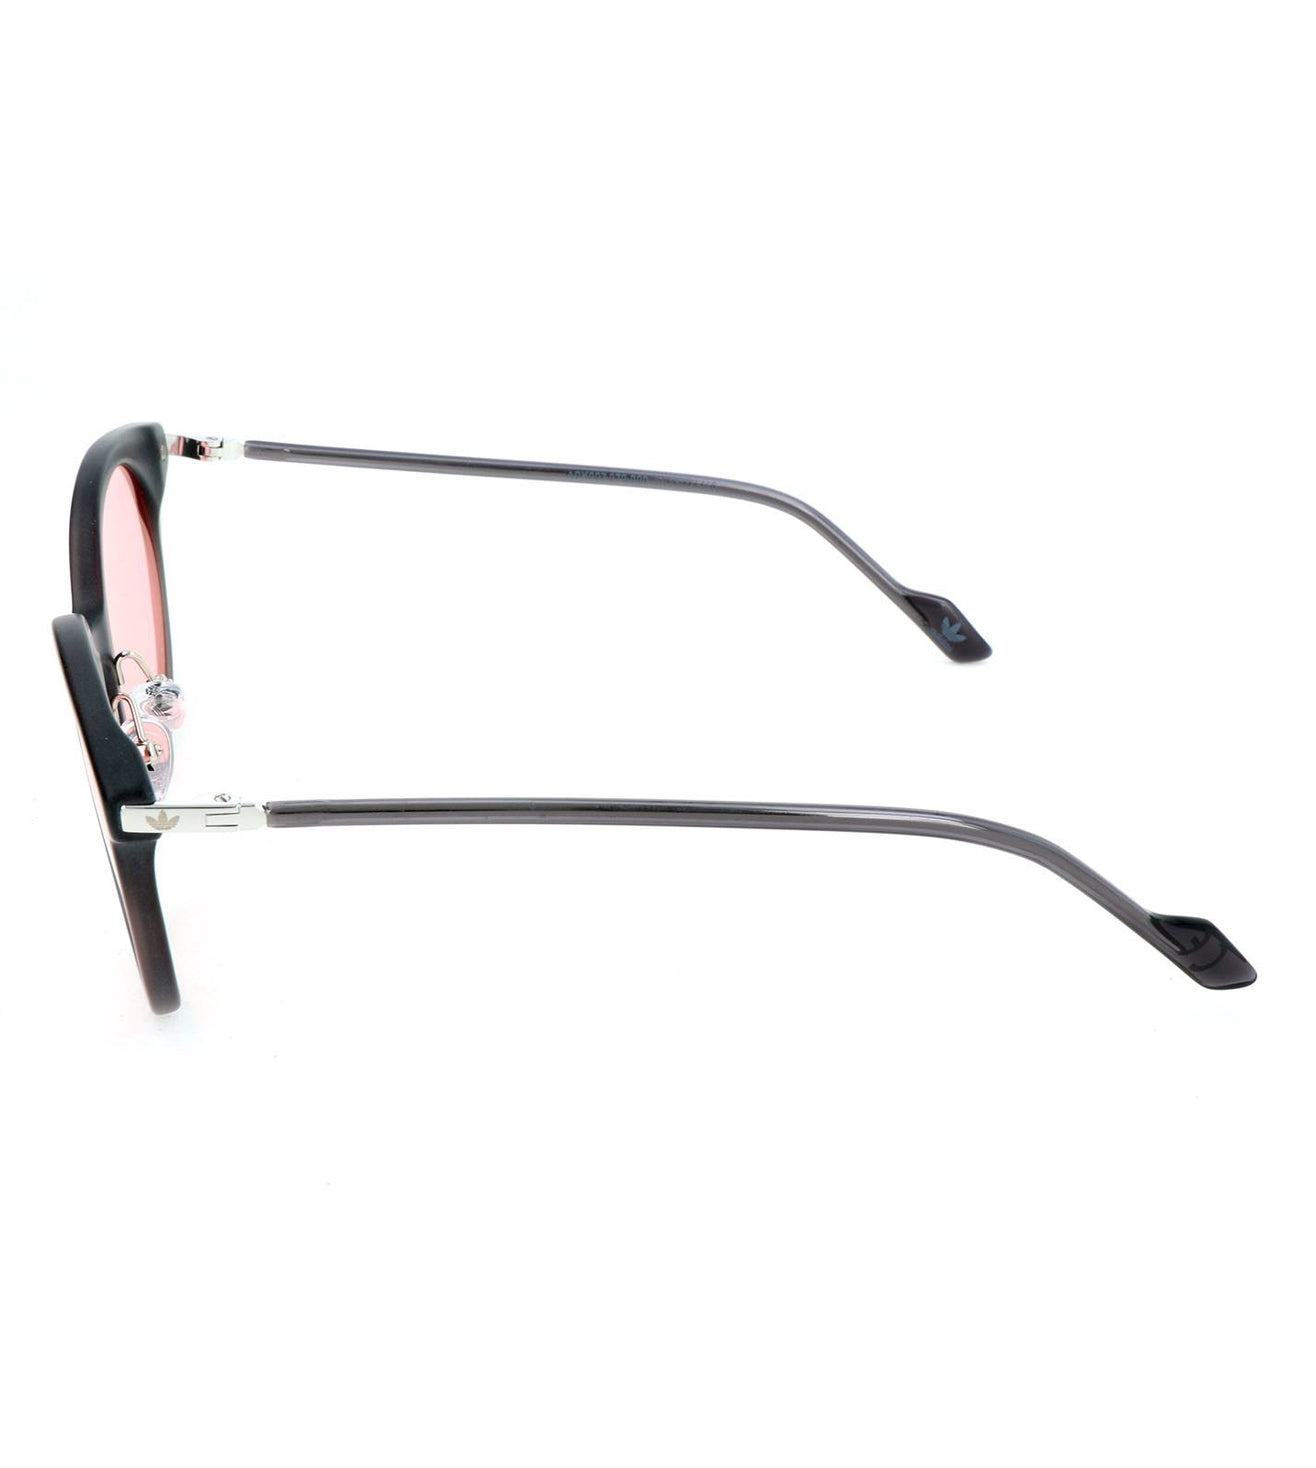 pink oval Unisex Sunglasses